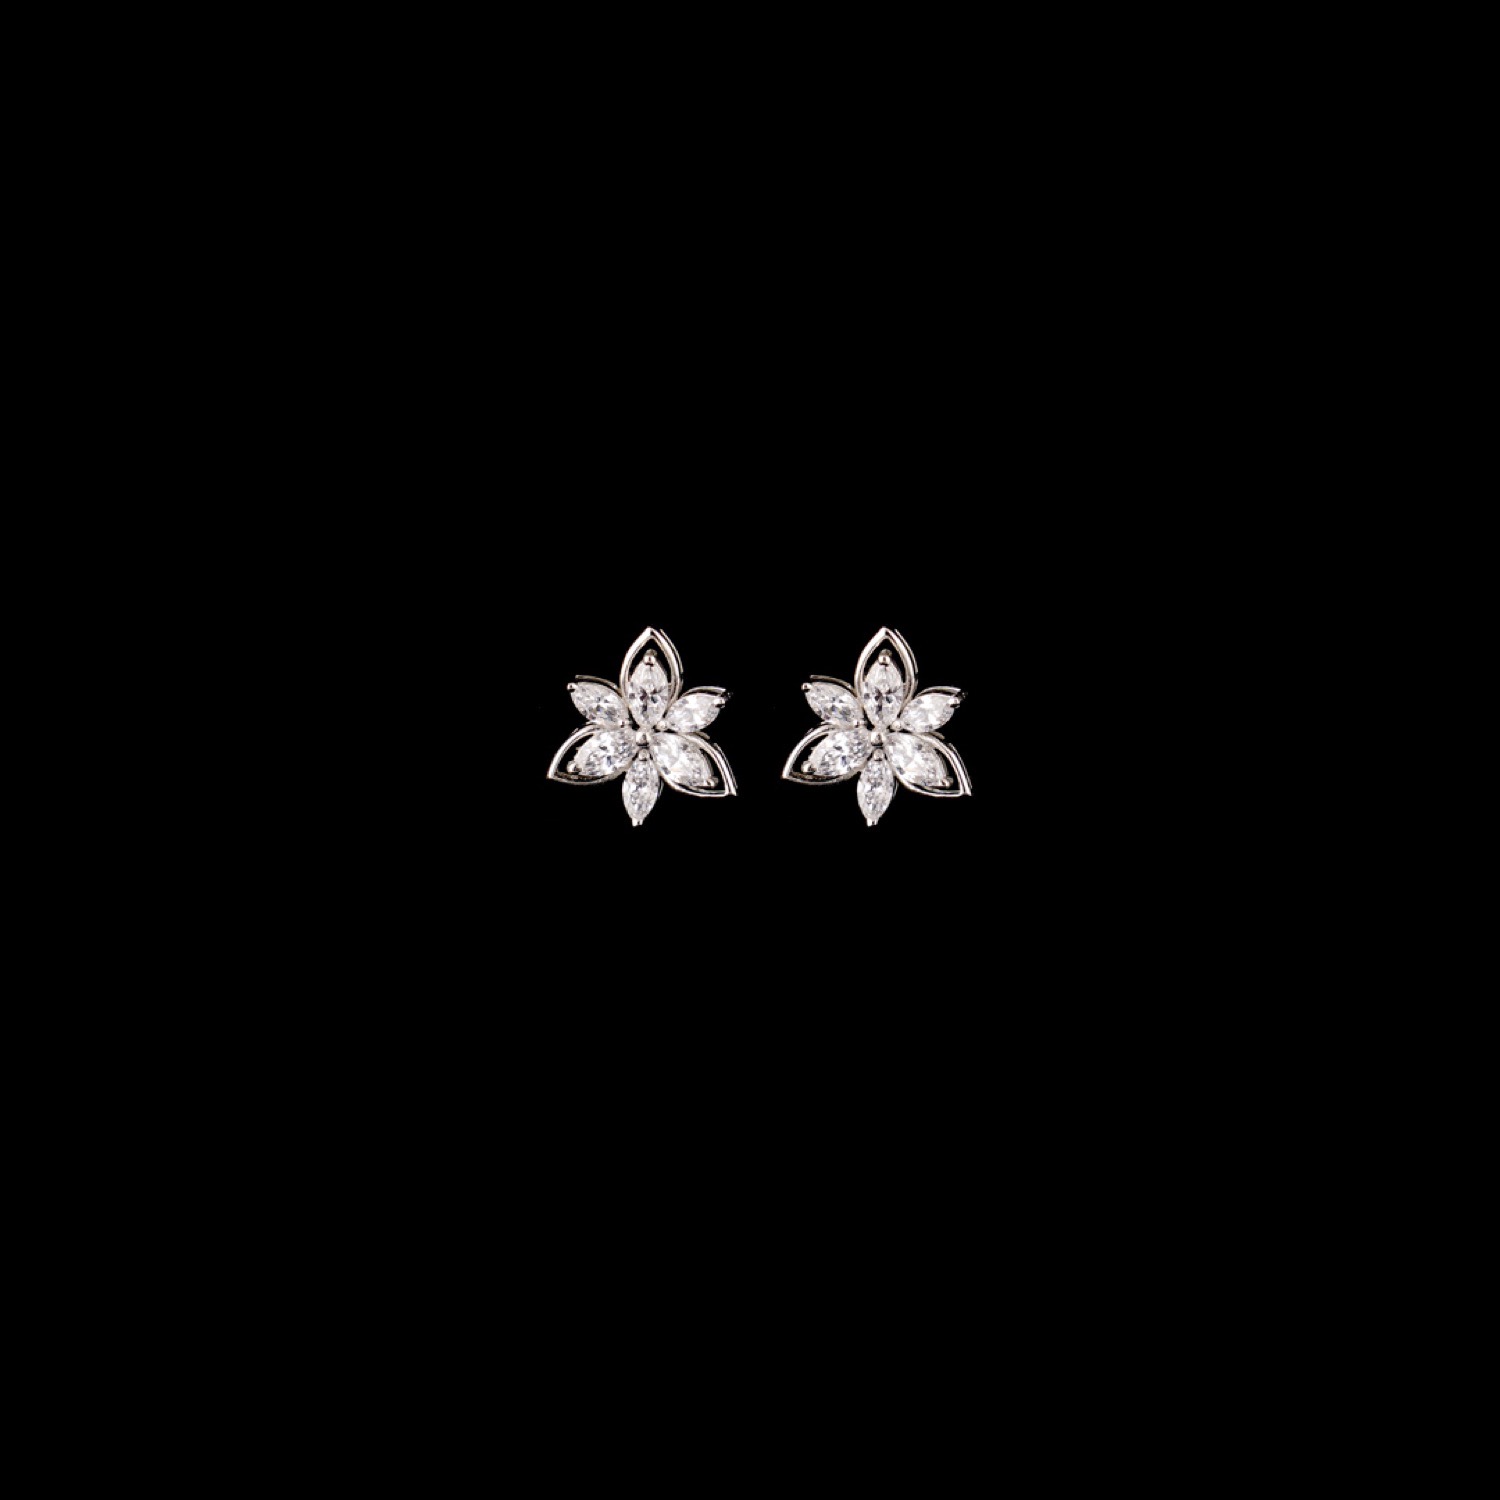 varam_earrings_102022_dainty_flower_marquise_cut_stone_silver_earrings-1